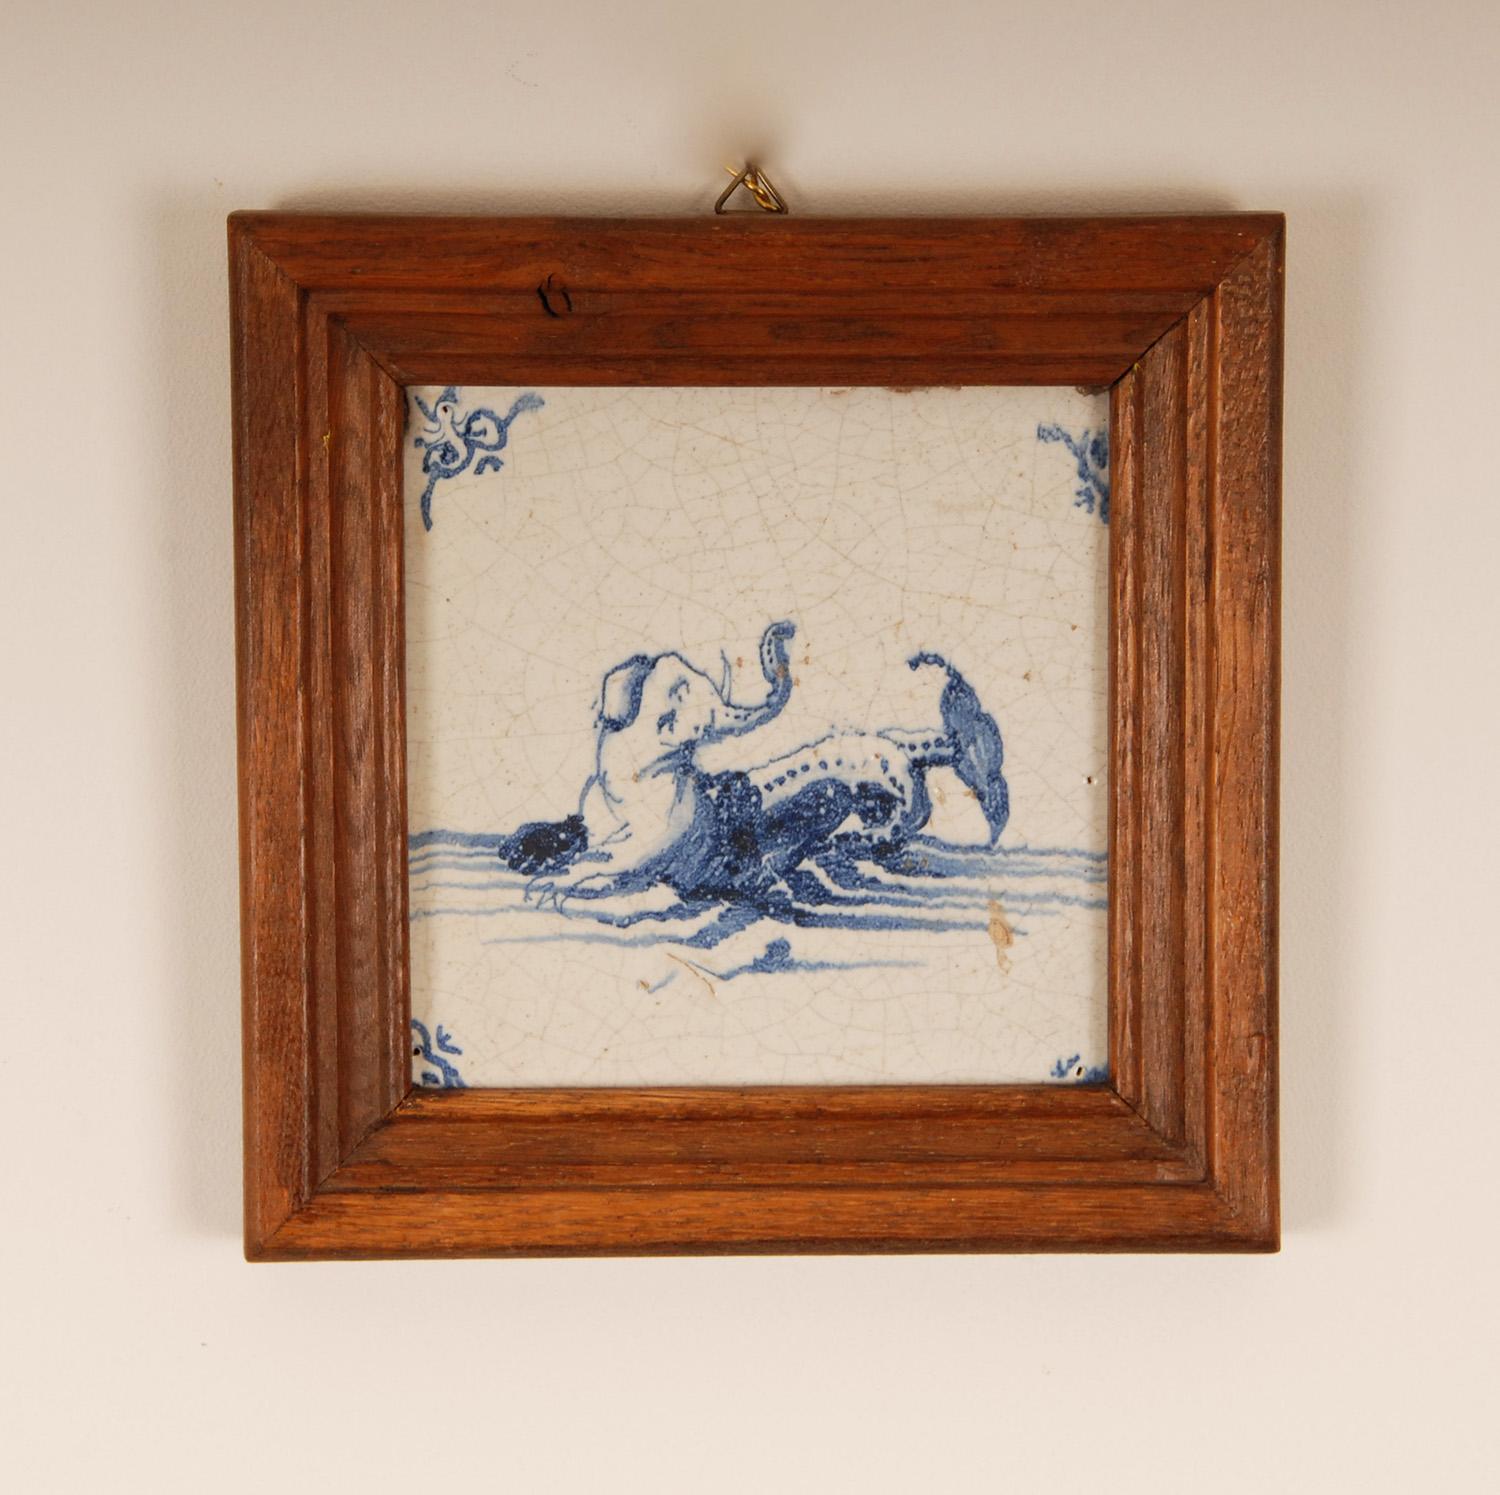 18th Century Delft Tiles Oak Framed Blue and White Mermaid Dutch Delftware Tiles For Sale 1